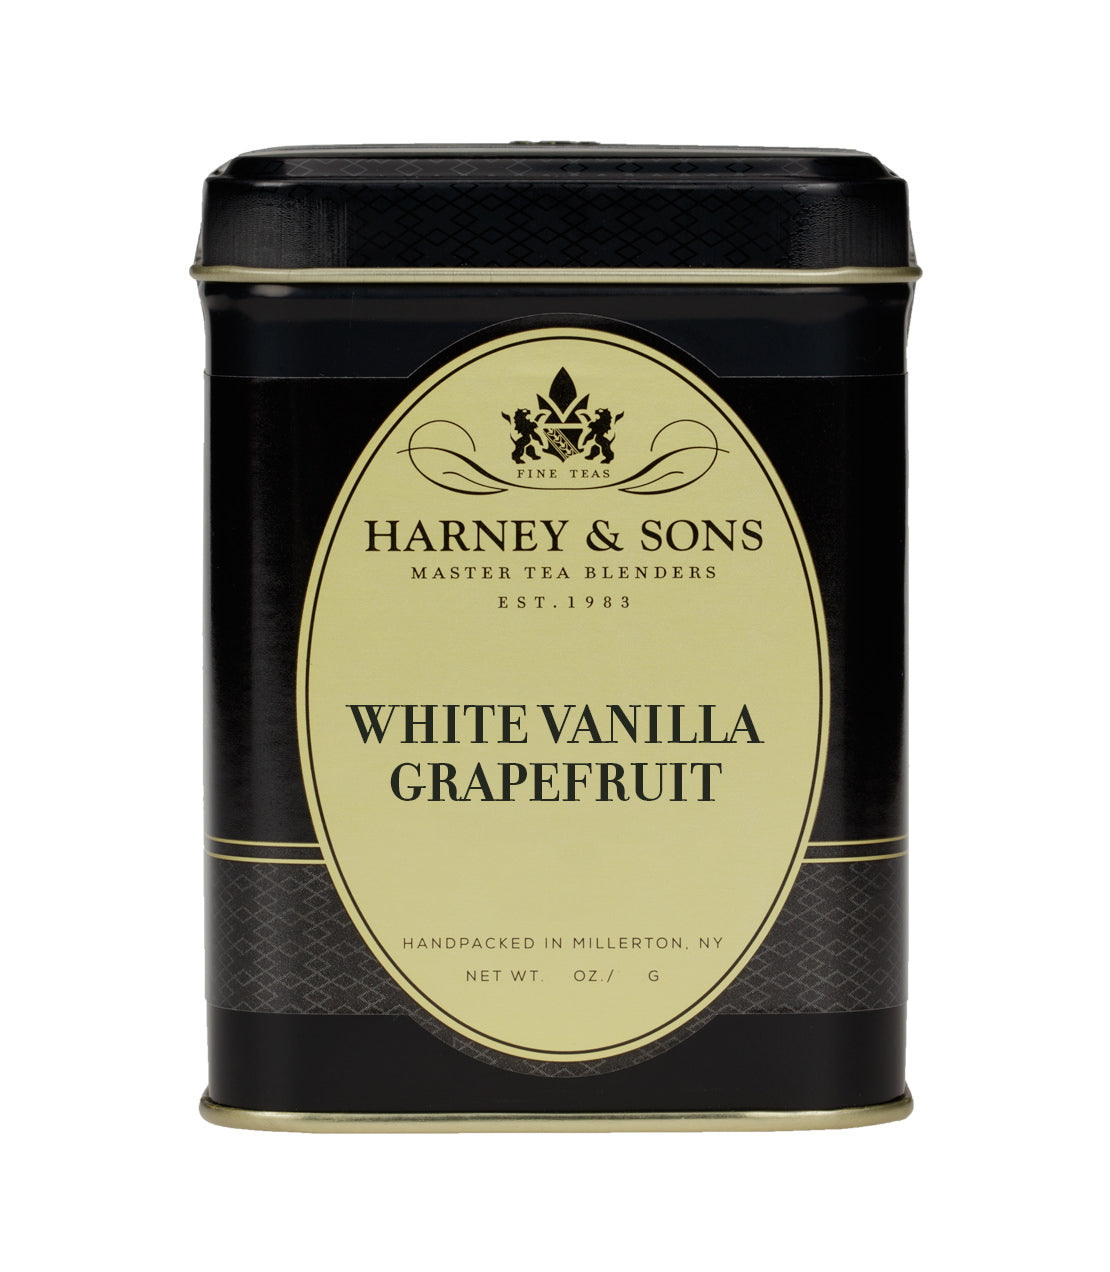 White Vanilla Grapefruit